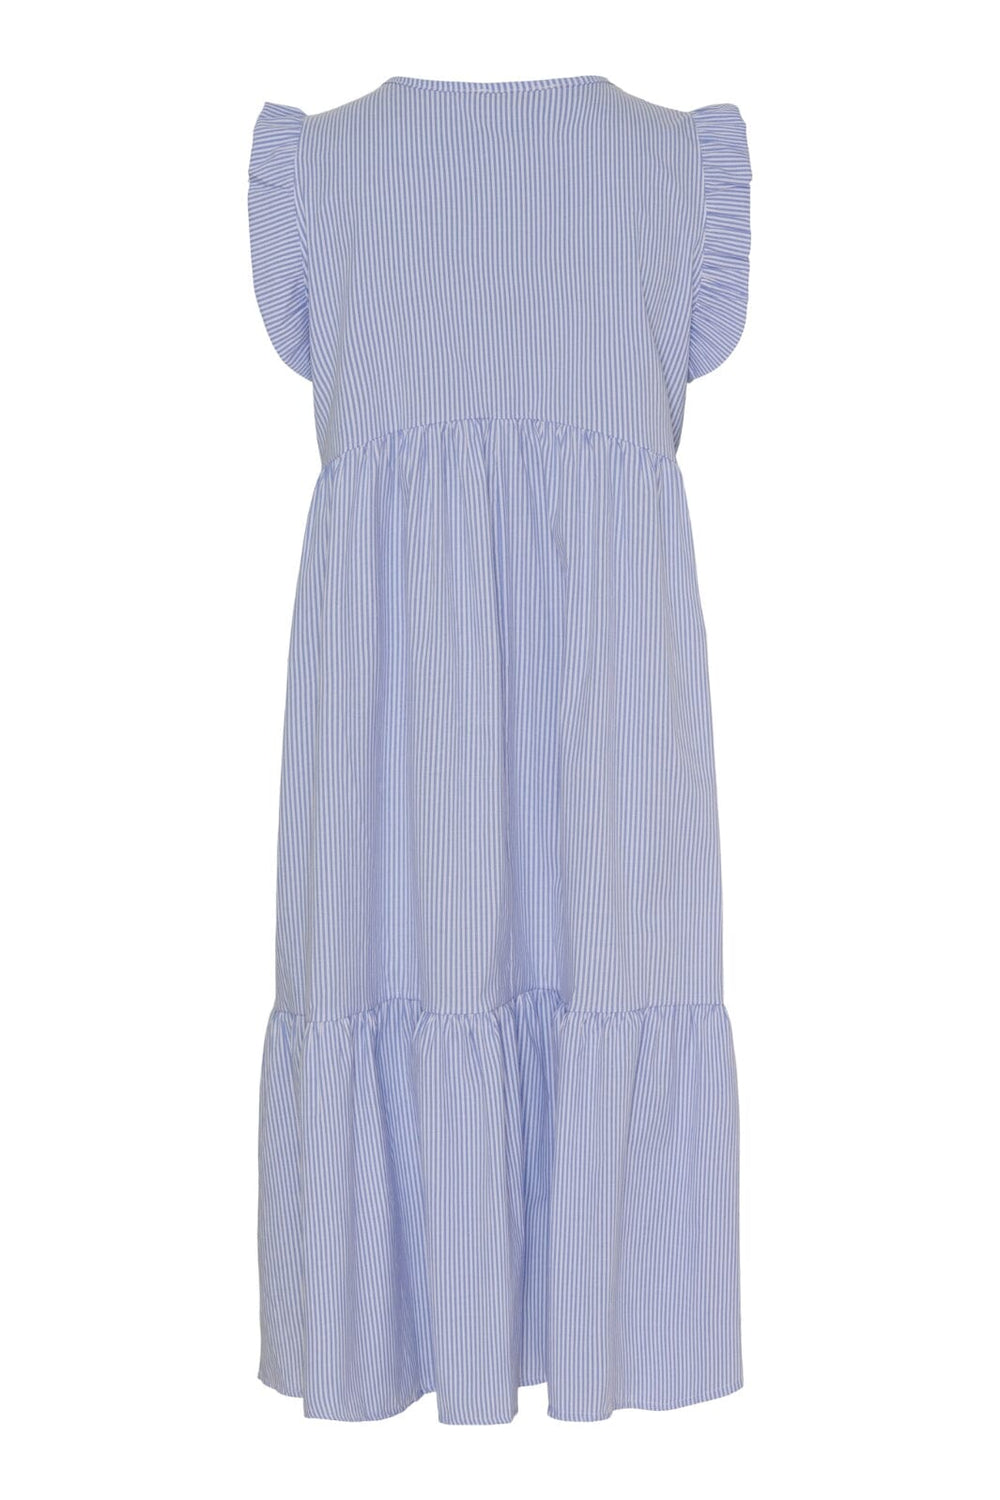 Marta Du Chateau - Mdcelma Dress - Sky Blue Stripe Kjoler 